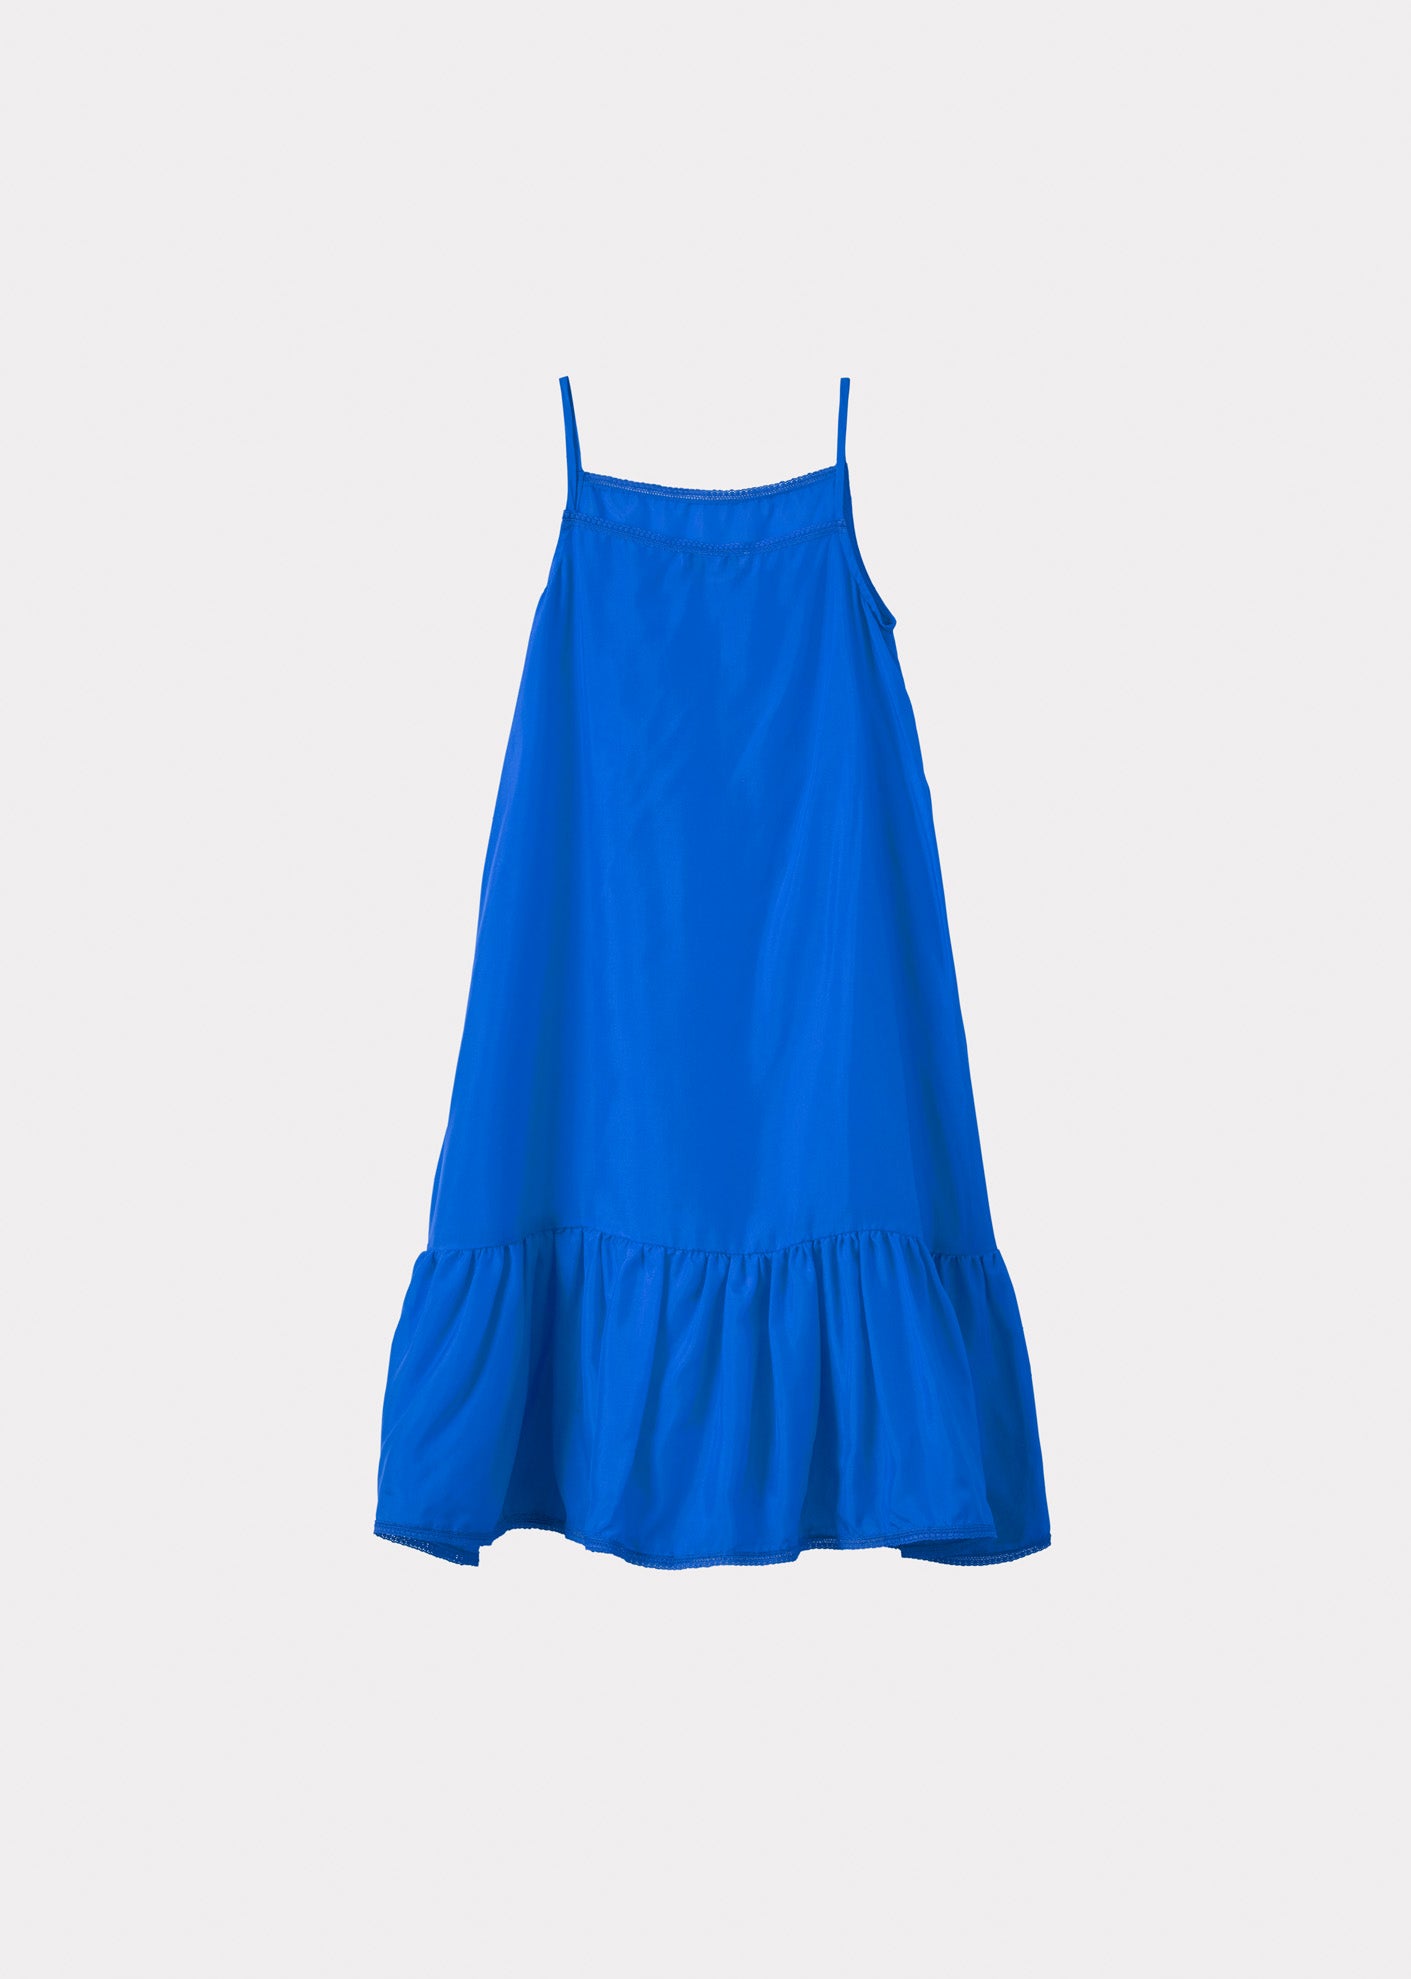 GRAPE SLIP DRESS TEEN - ROYAL BLUE